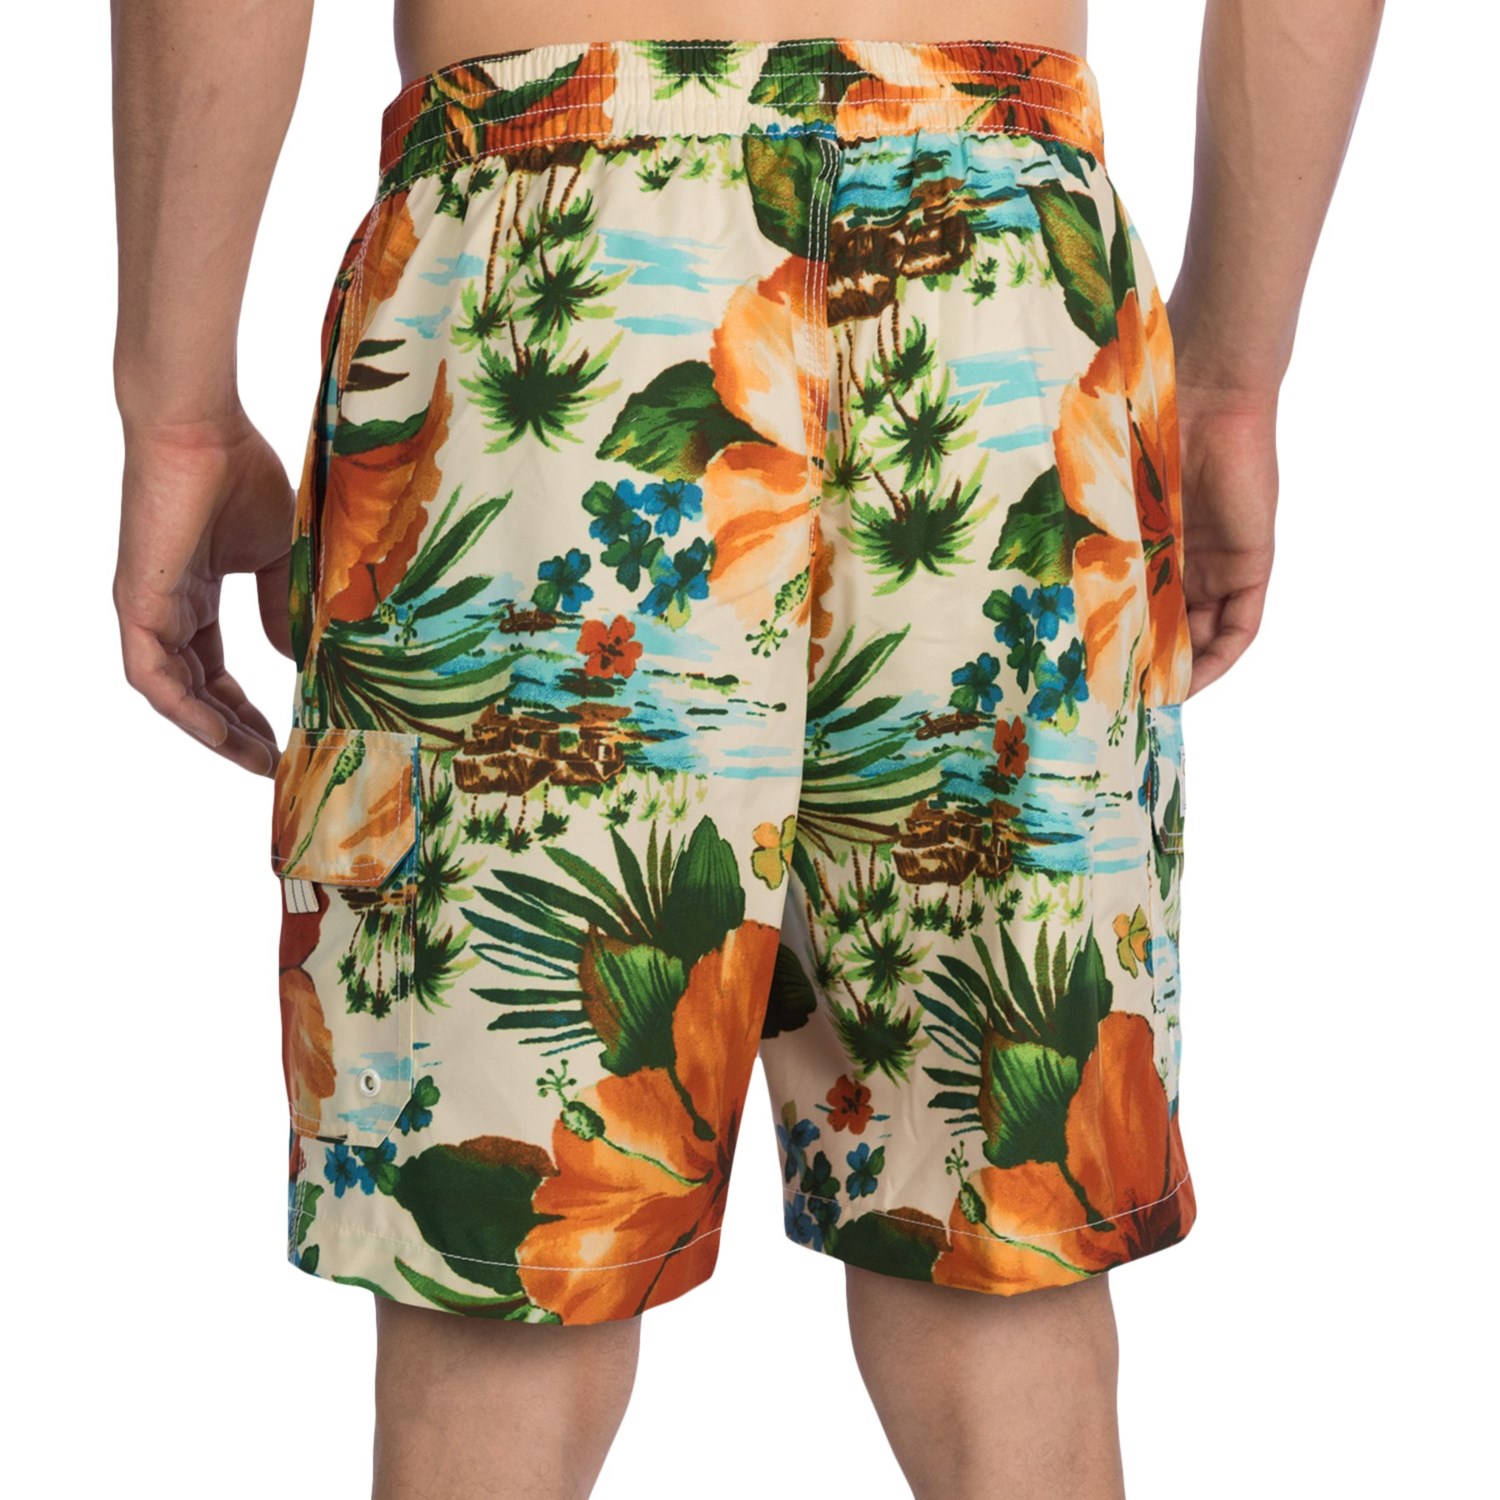 Caribbean Joe Hawaiian Boardshorts (For Men) 7716C - Save 53%